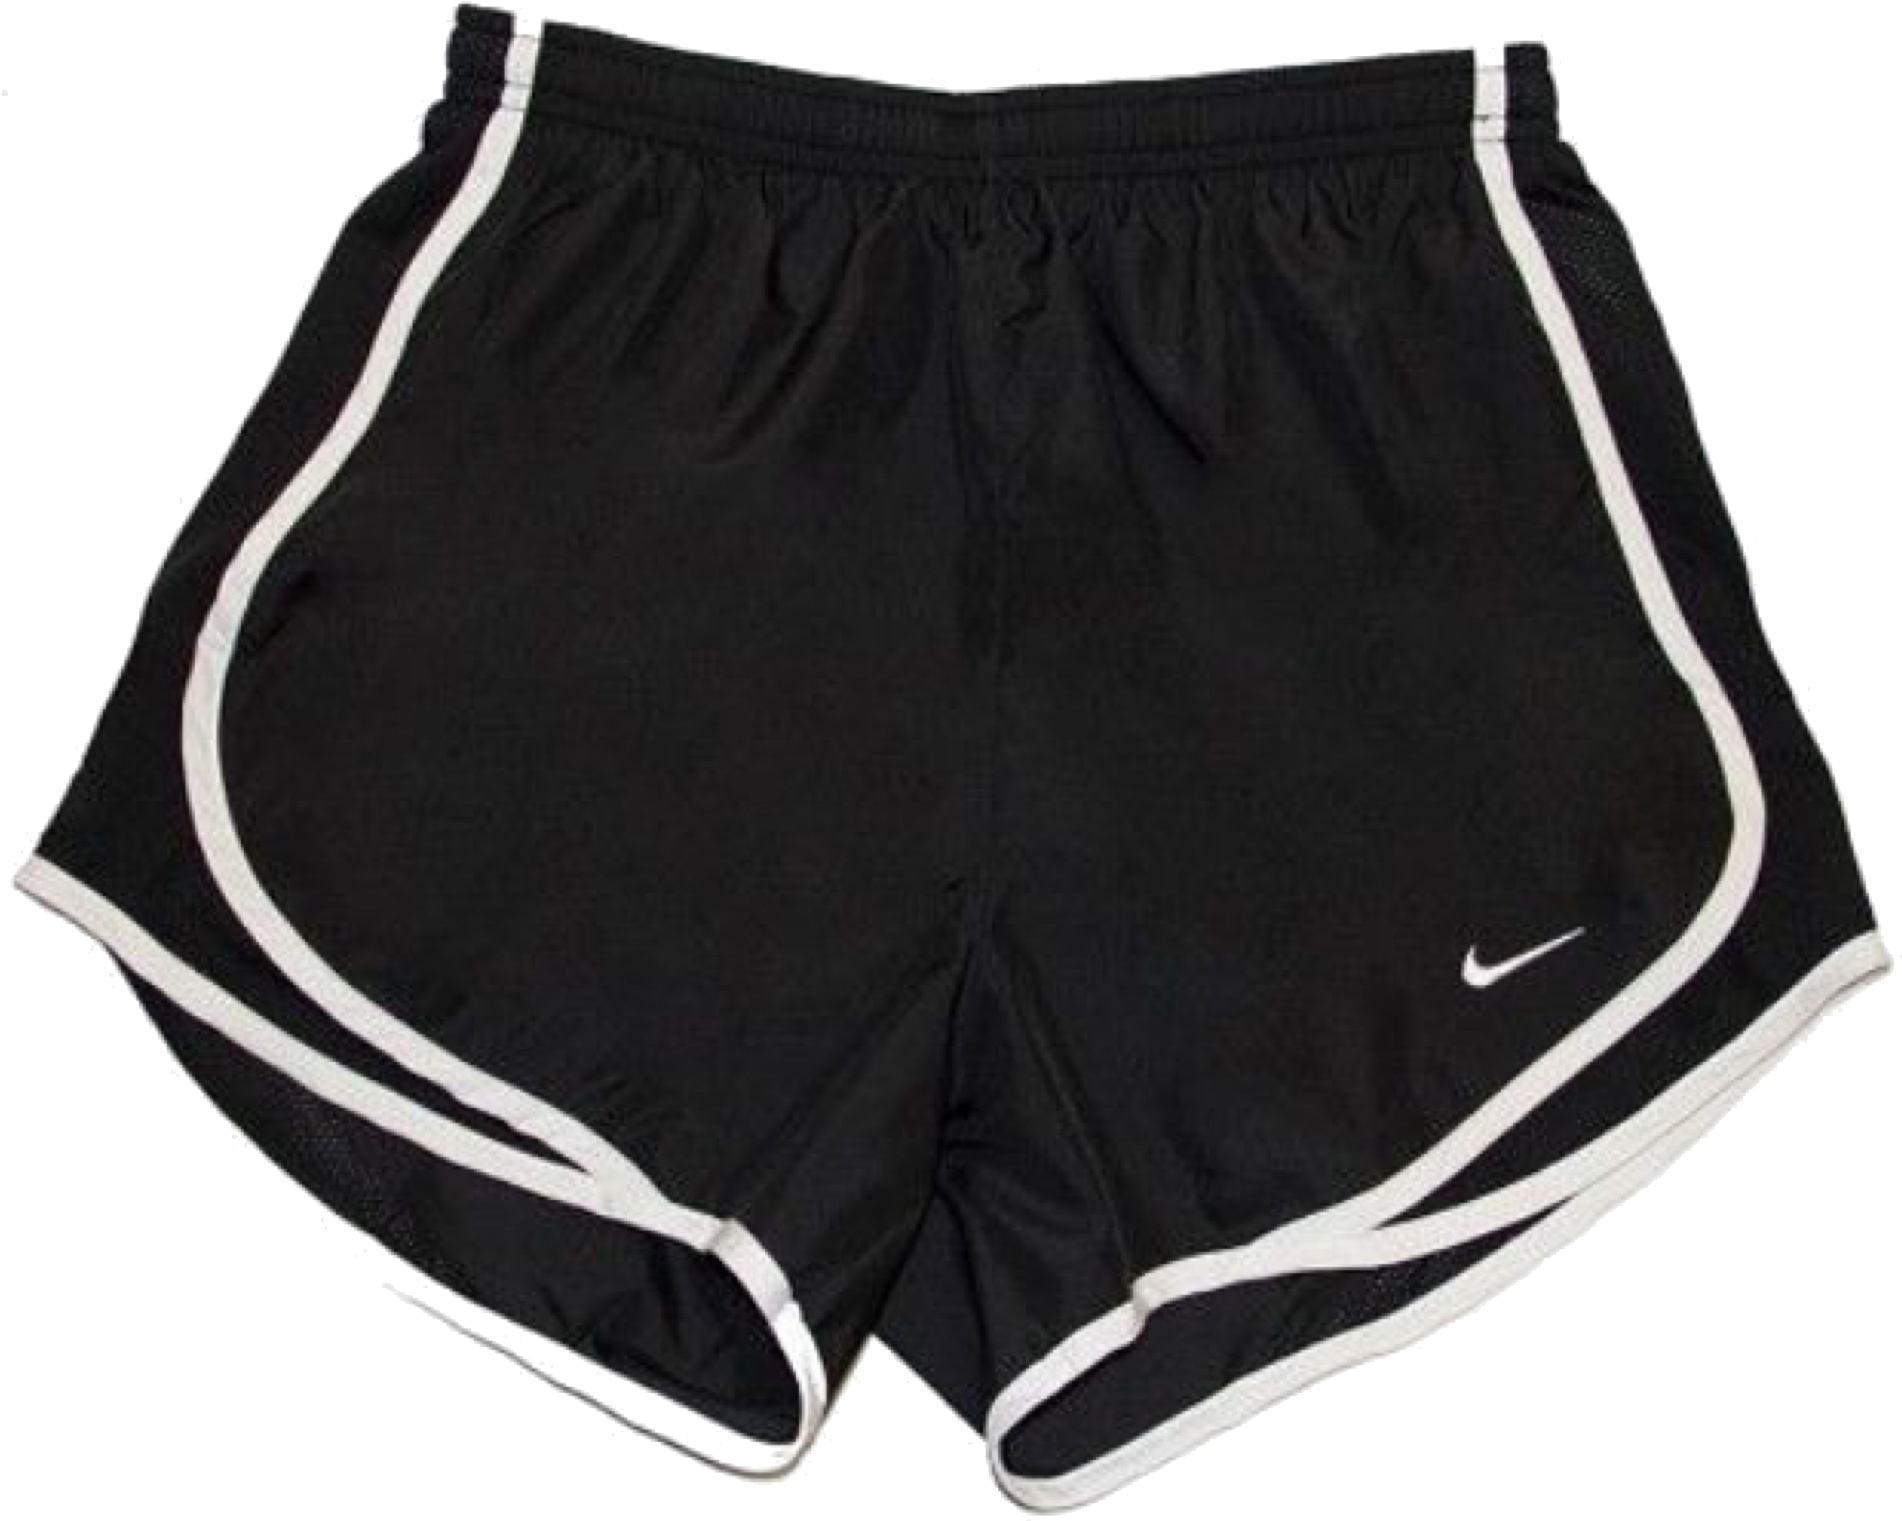 Black Nike Running Shorts PNG